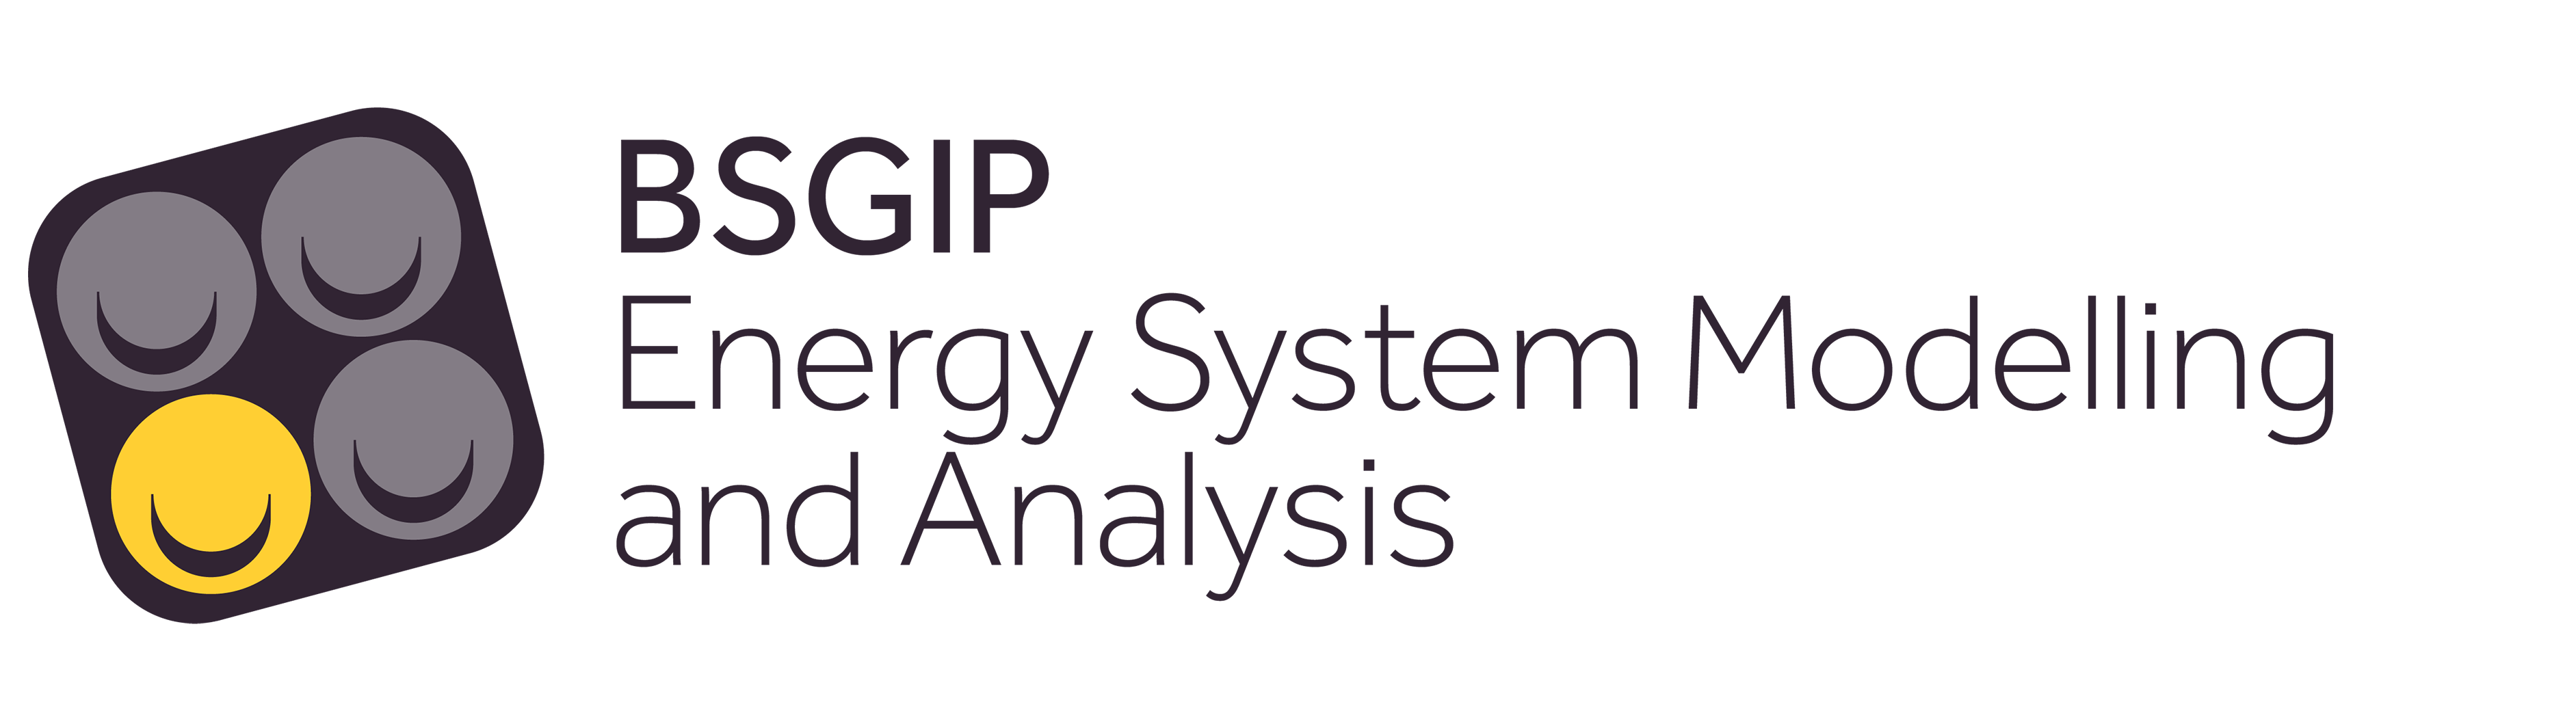 Battery Storage and Grid Integration Program Energy System Modelling Logo